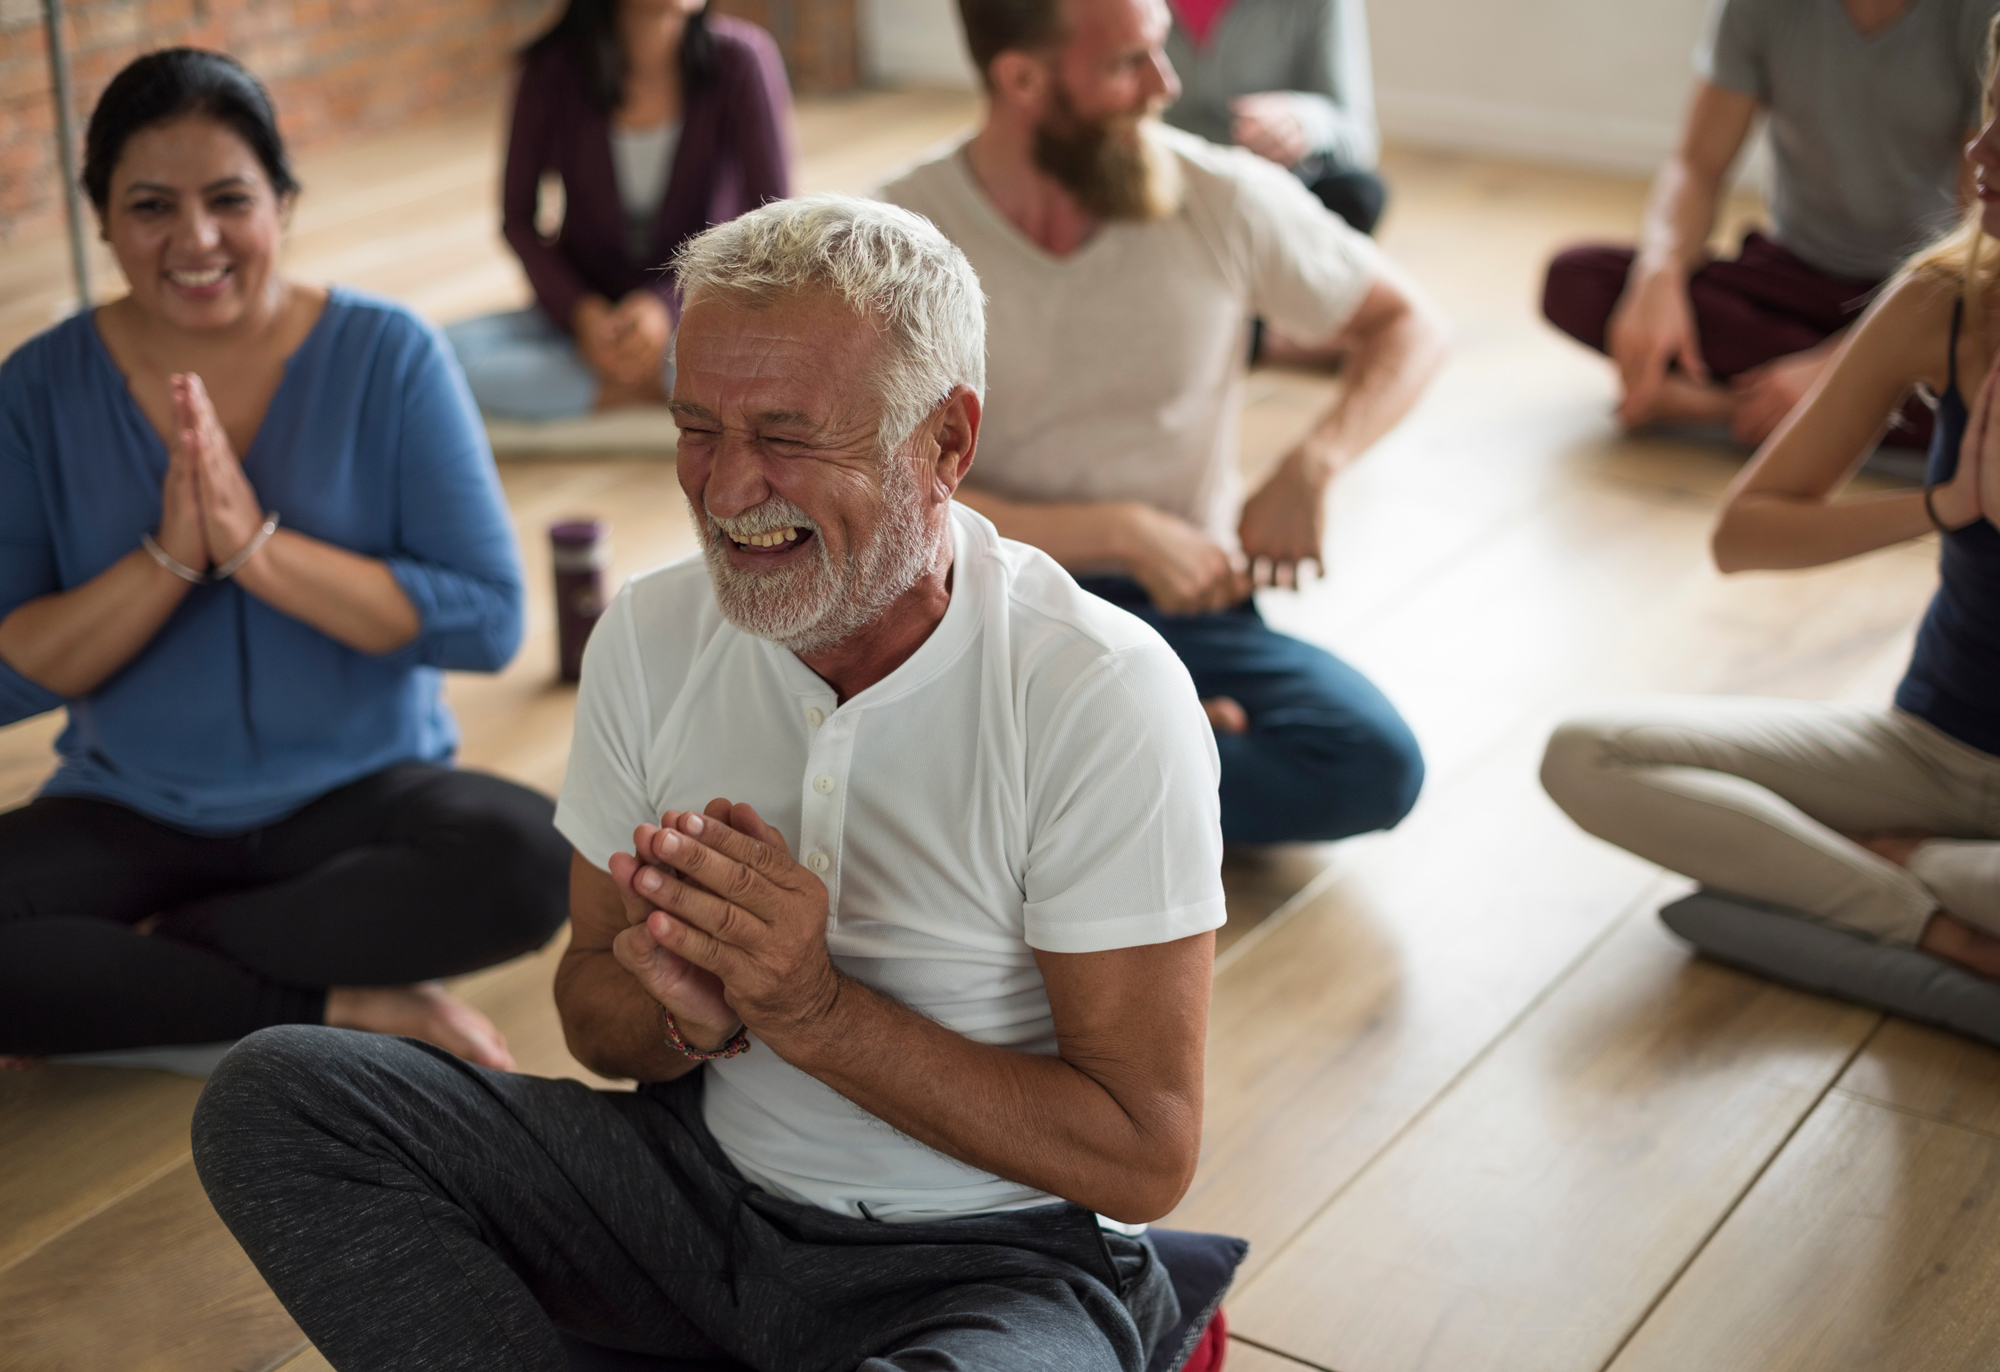 Older individuals partaking in mindfulness practice